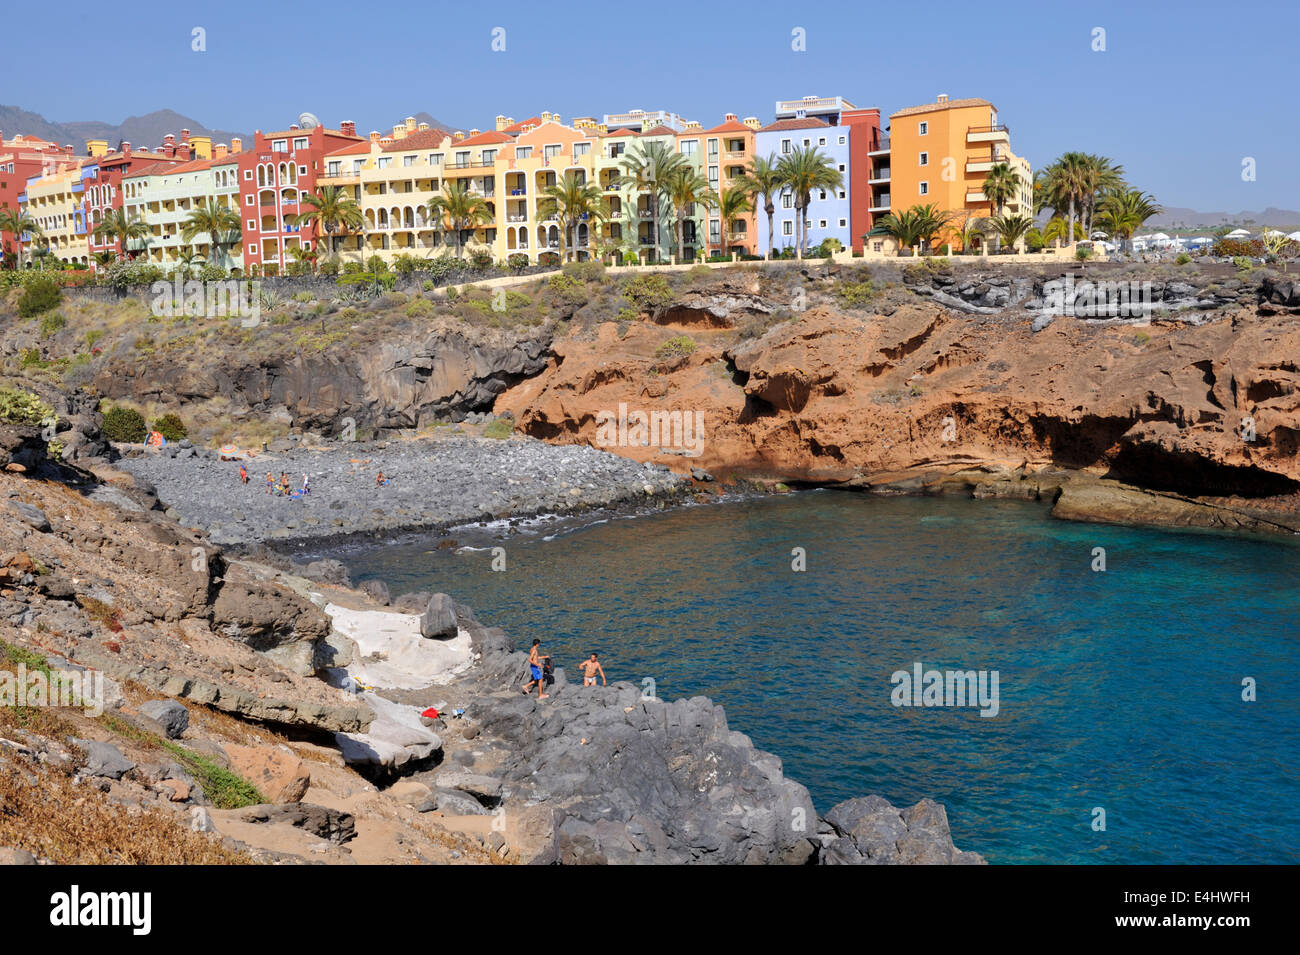 Beach, bay, apartment buildings seafront of Playa Paraiso, Tenerife Stock Photo